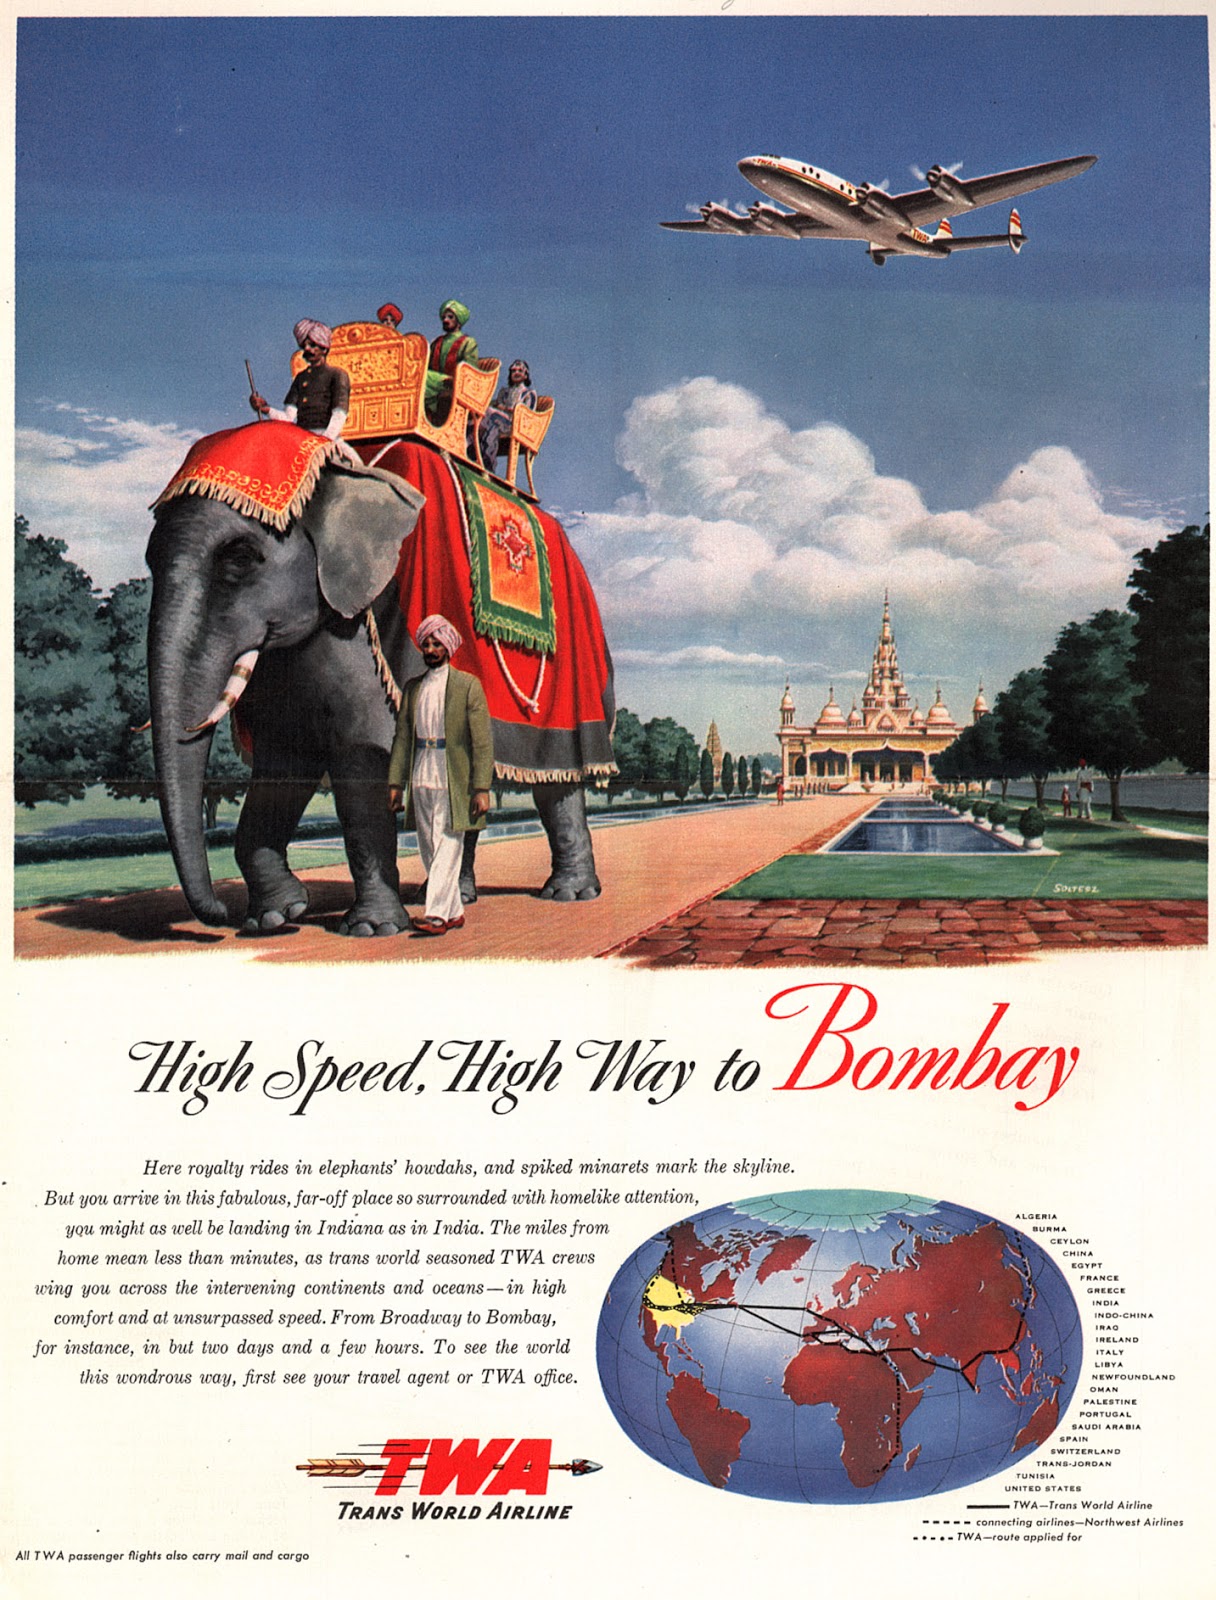 1947-TWA-High-Speed-High-Way-to-Bombay.jpg